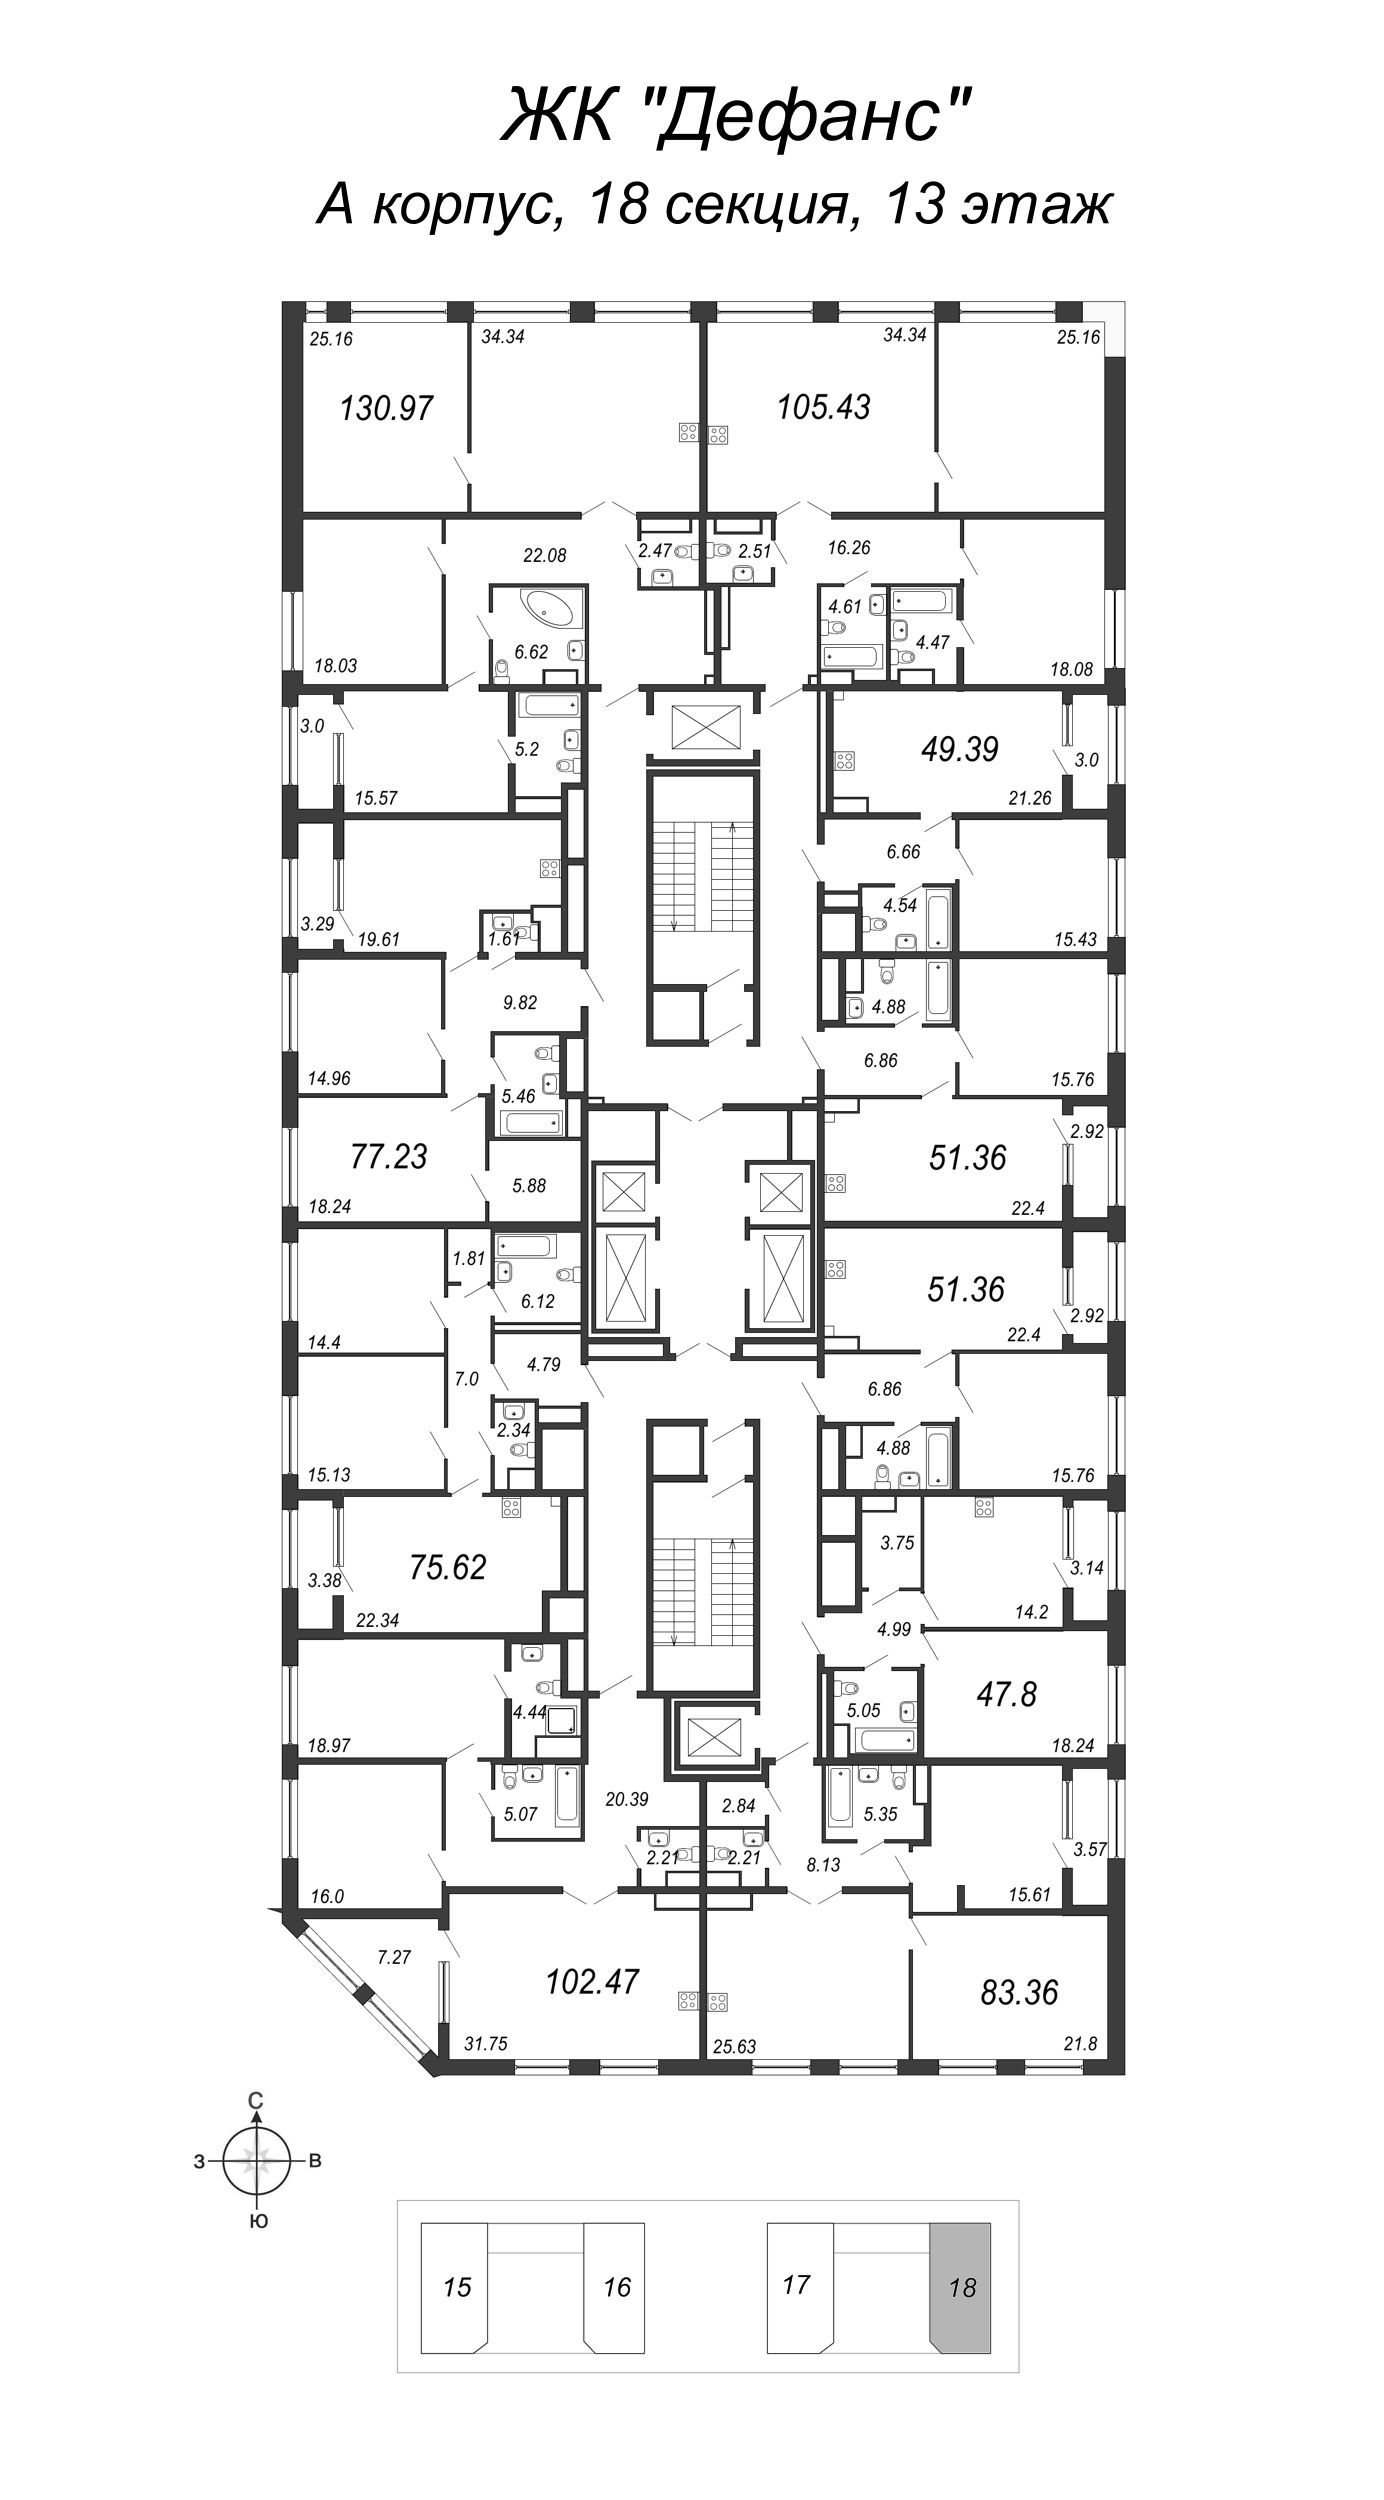 4-комнатная (Евро) квартира, 130.97 м² - планировка этажа